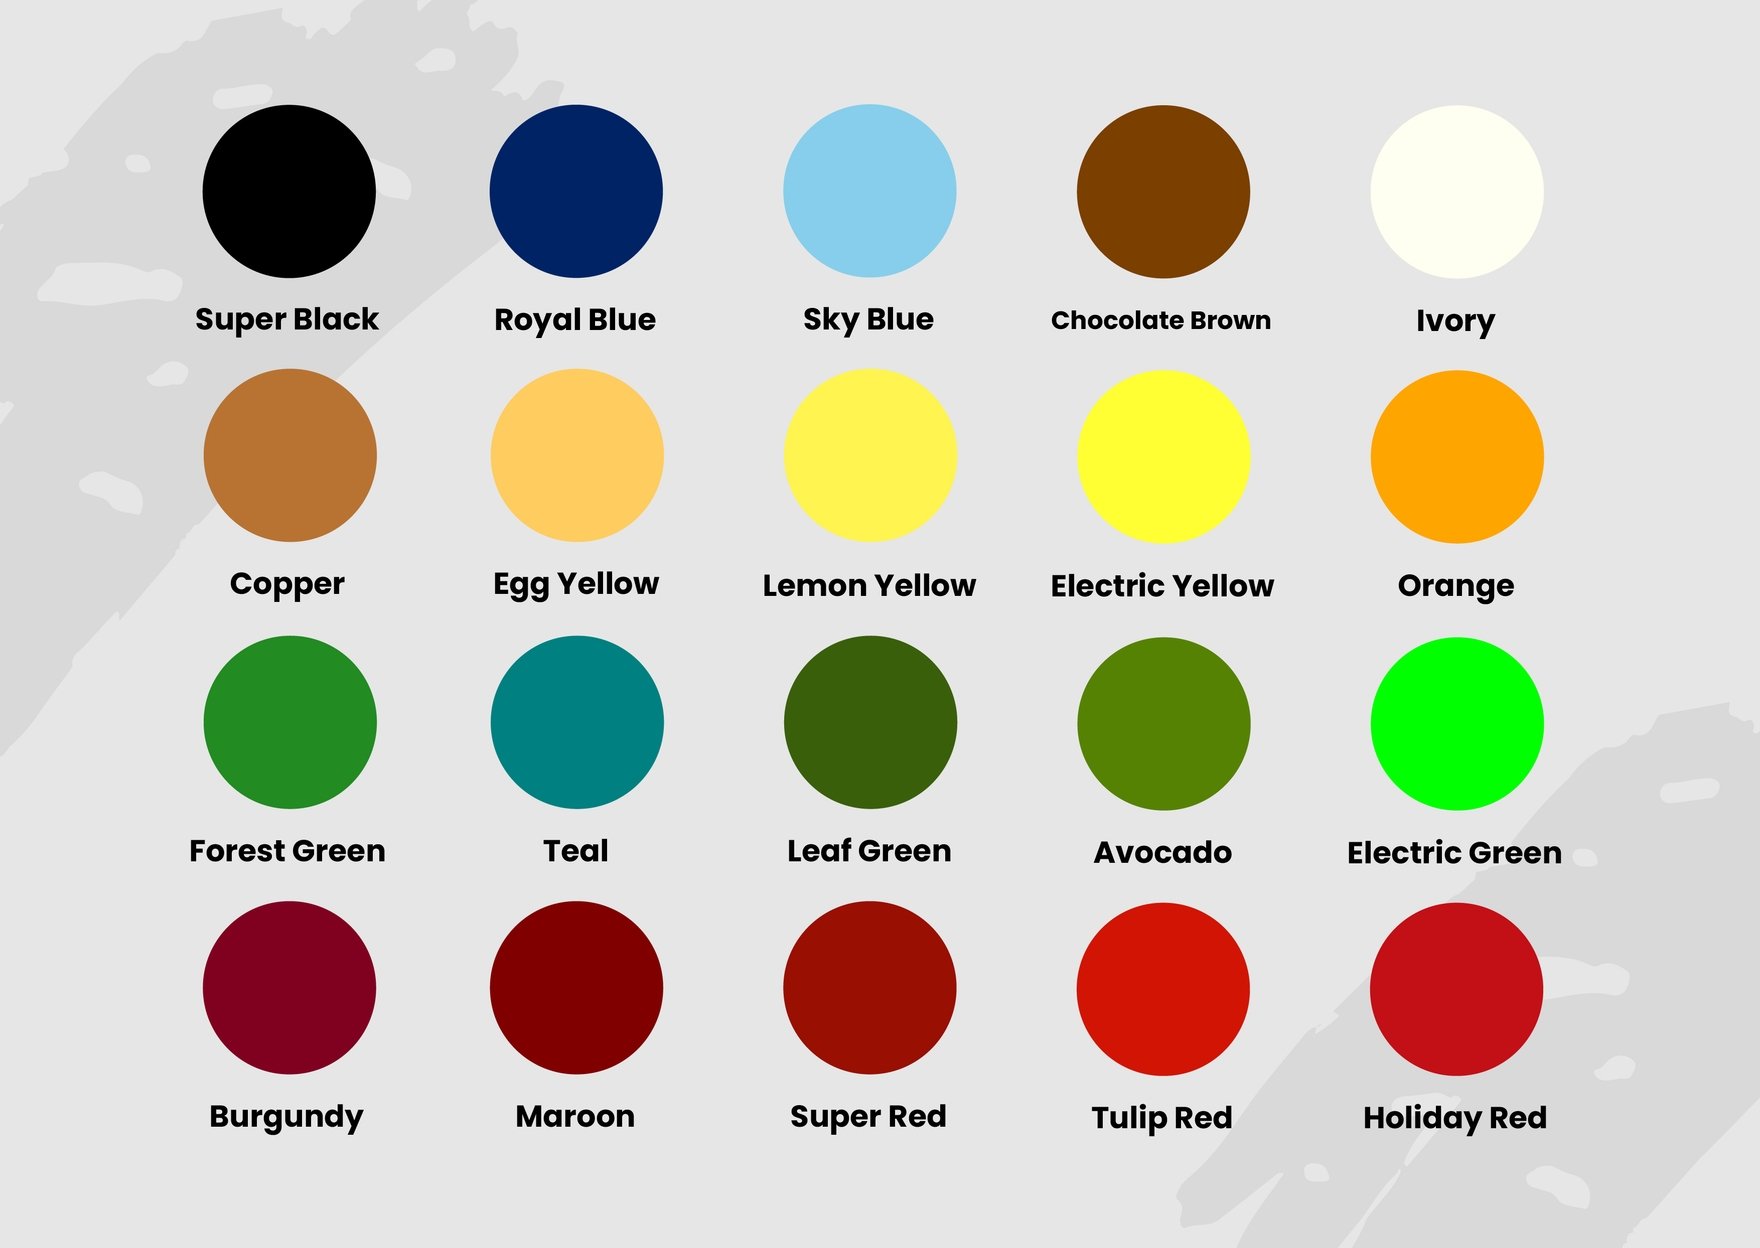 Sample Food Coloring Chart in PDF, Illustrator